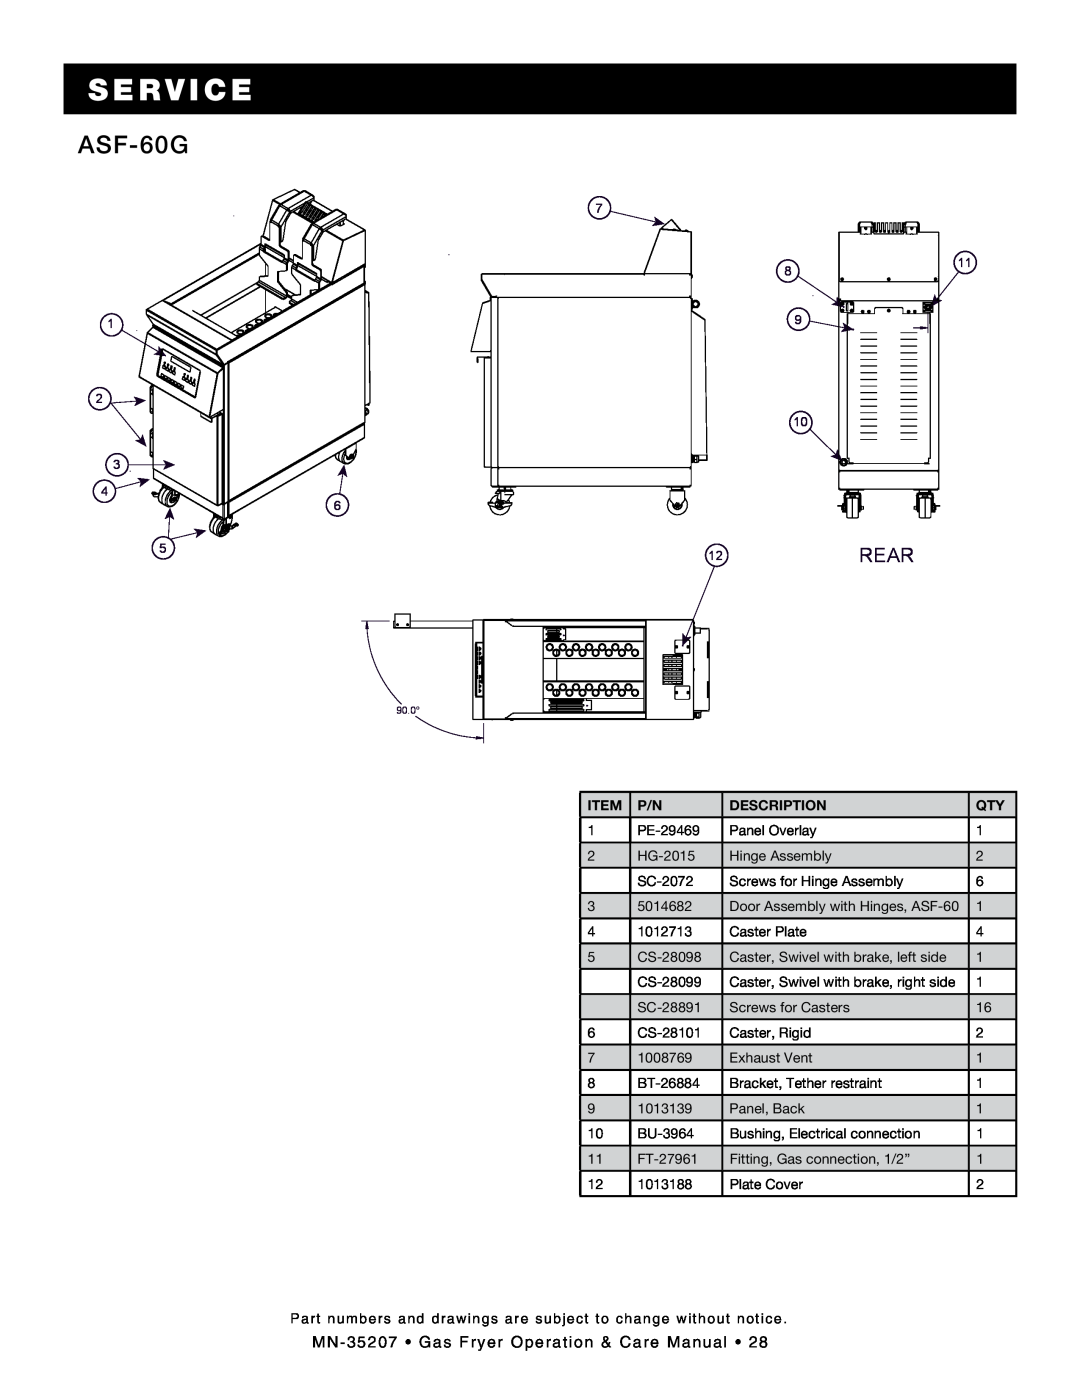 Alto-Shaam Gas Fryer manual ASF-60G, s e r v i c e, Rear, Description 